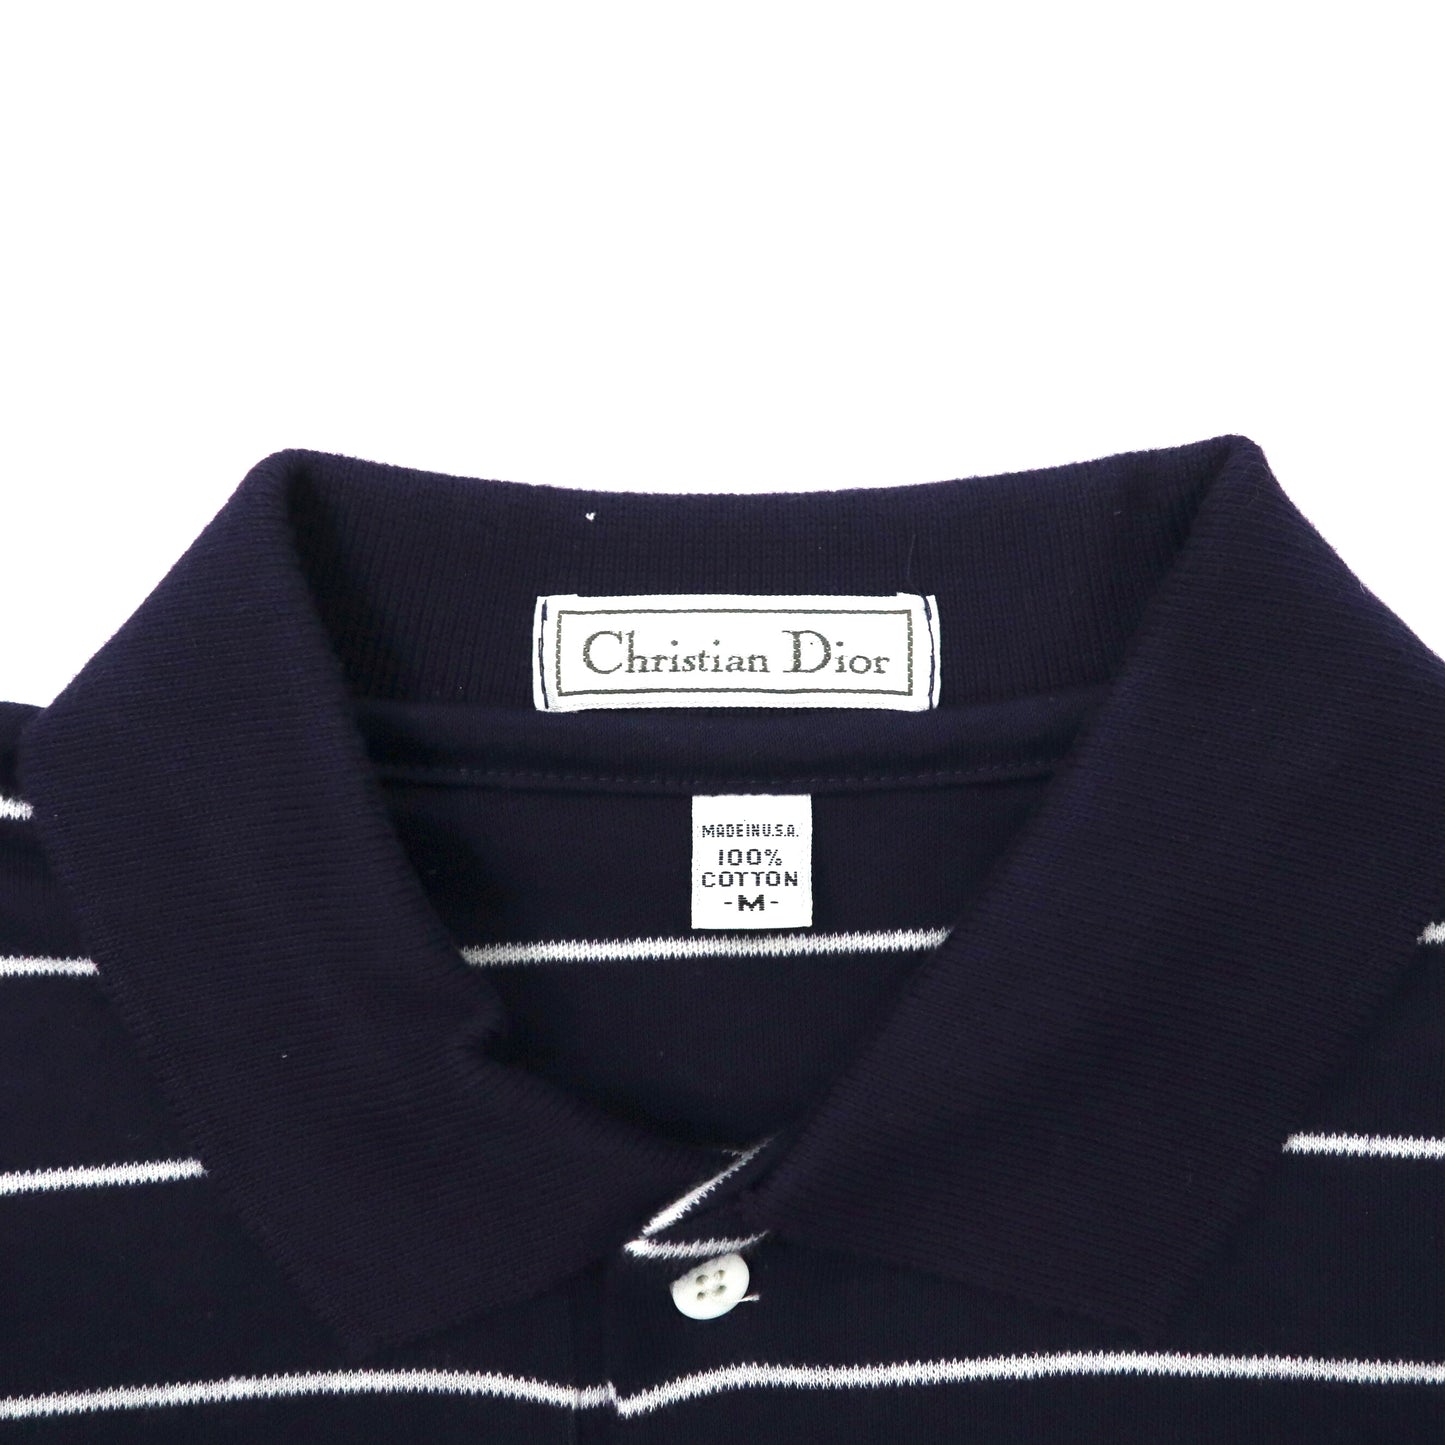 USA製 Christian Dior ポロシャツ M ネイビー ボーダー コットン ワンポイントロゴ刺繍 オールド